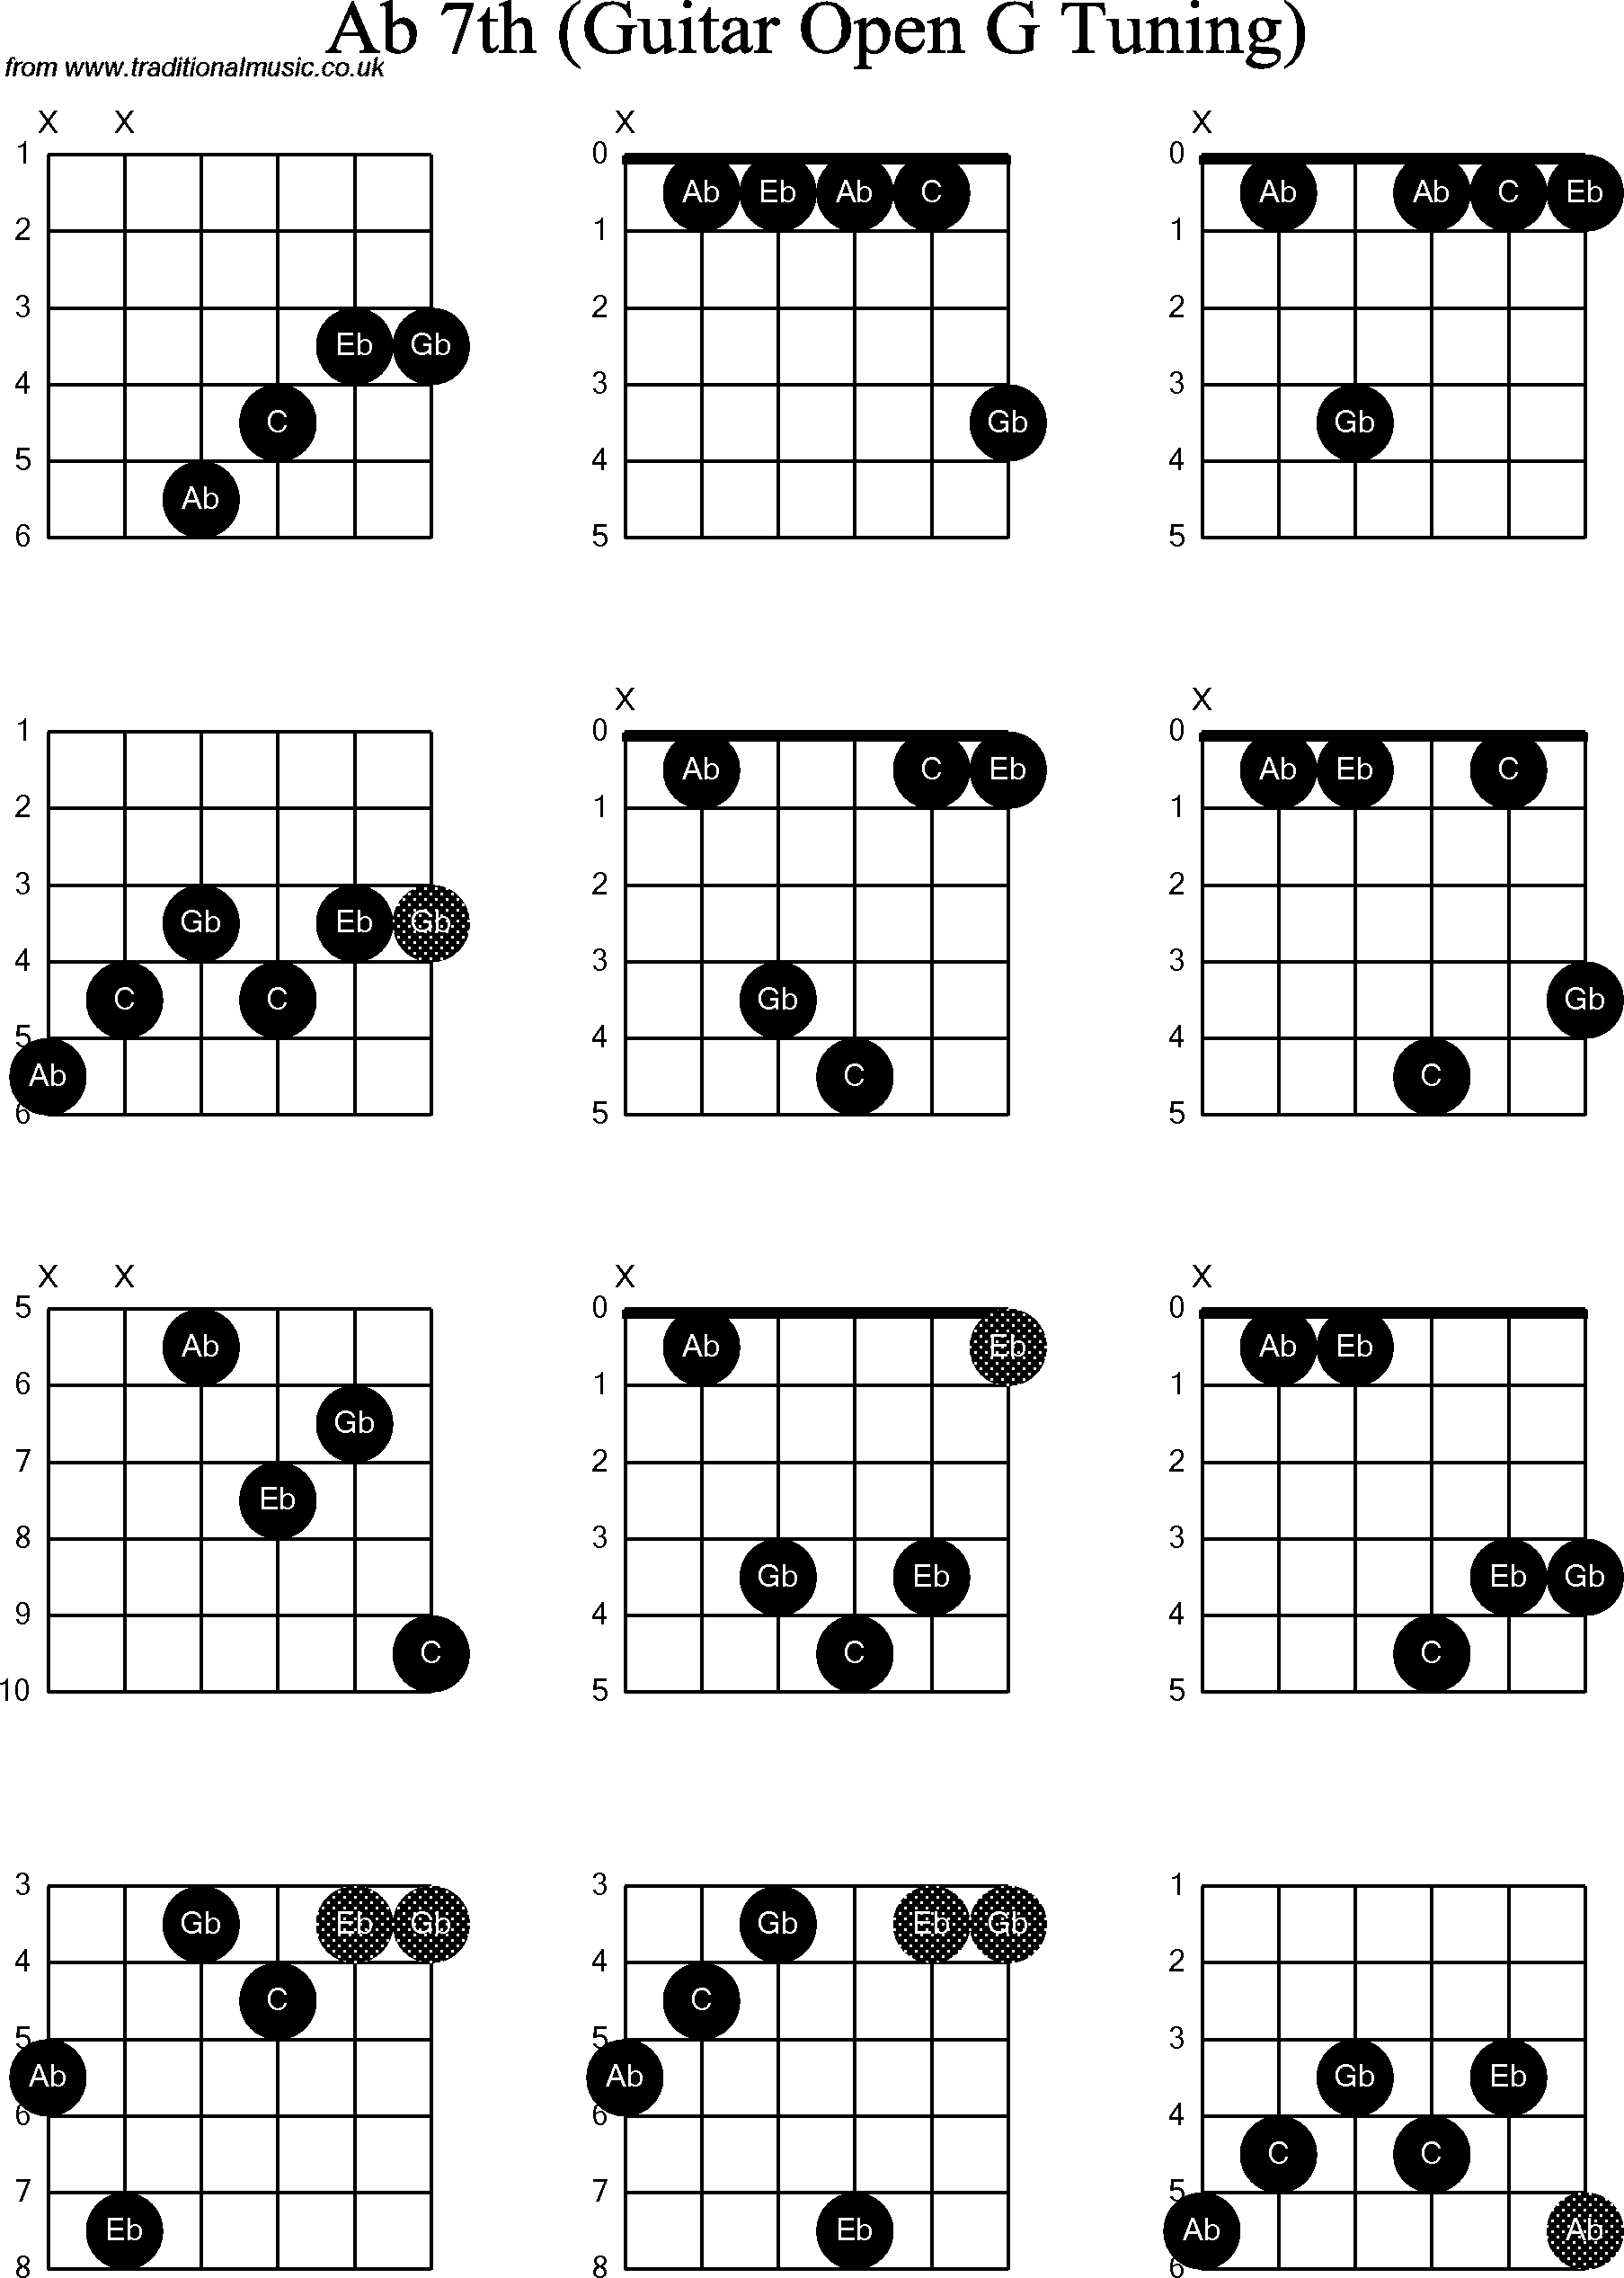 Chord diagrams for Dobro Ab7th